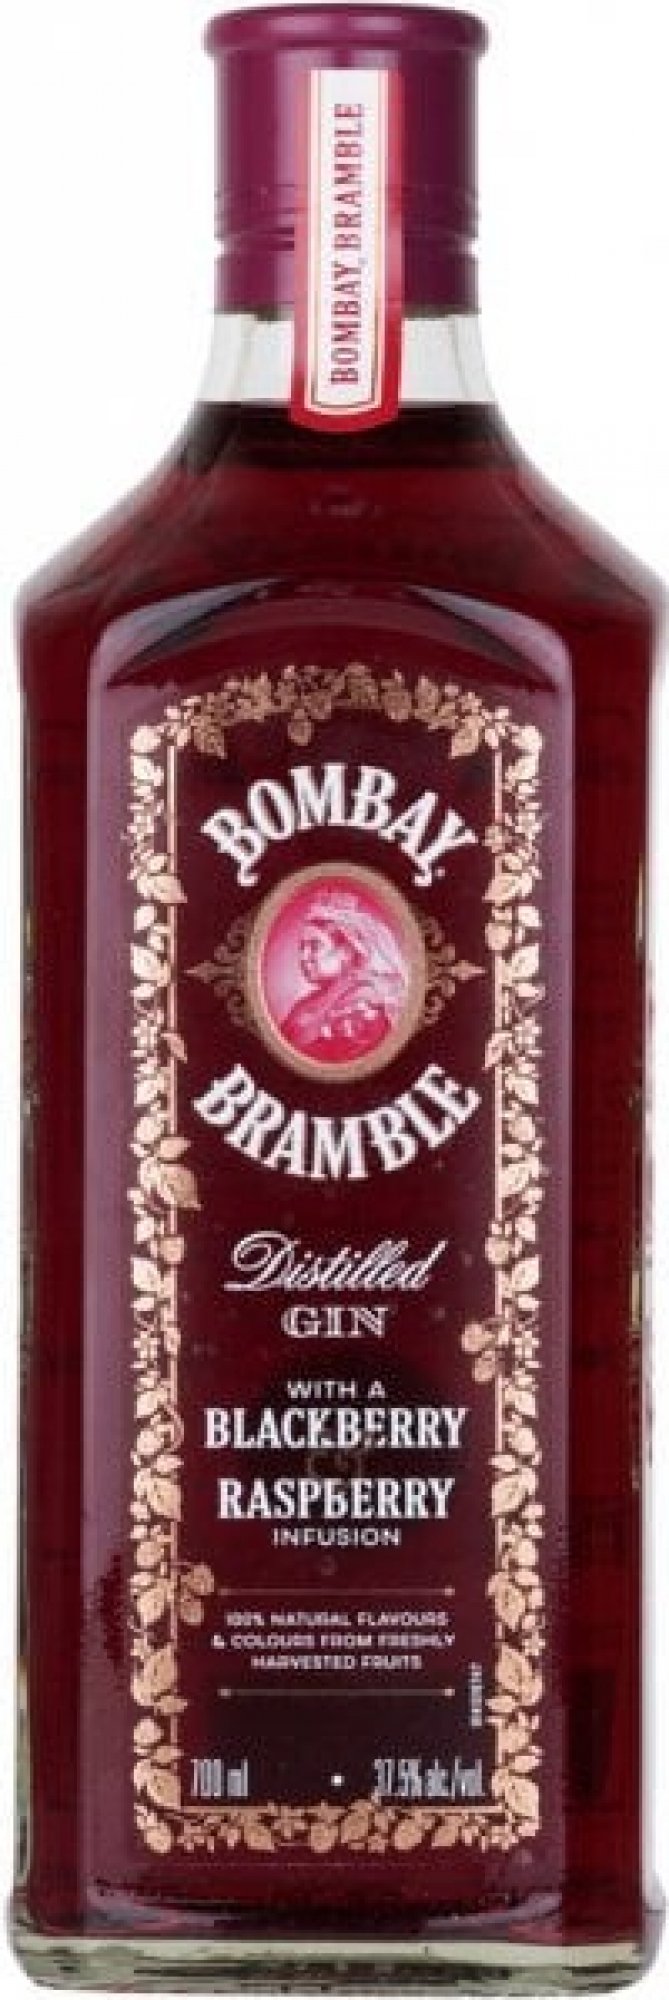 Bombay Bramble Blackberry & Raspberry Gin 37,5% 0,7l